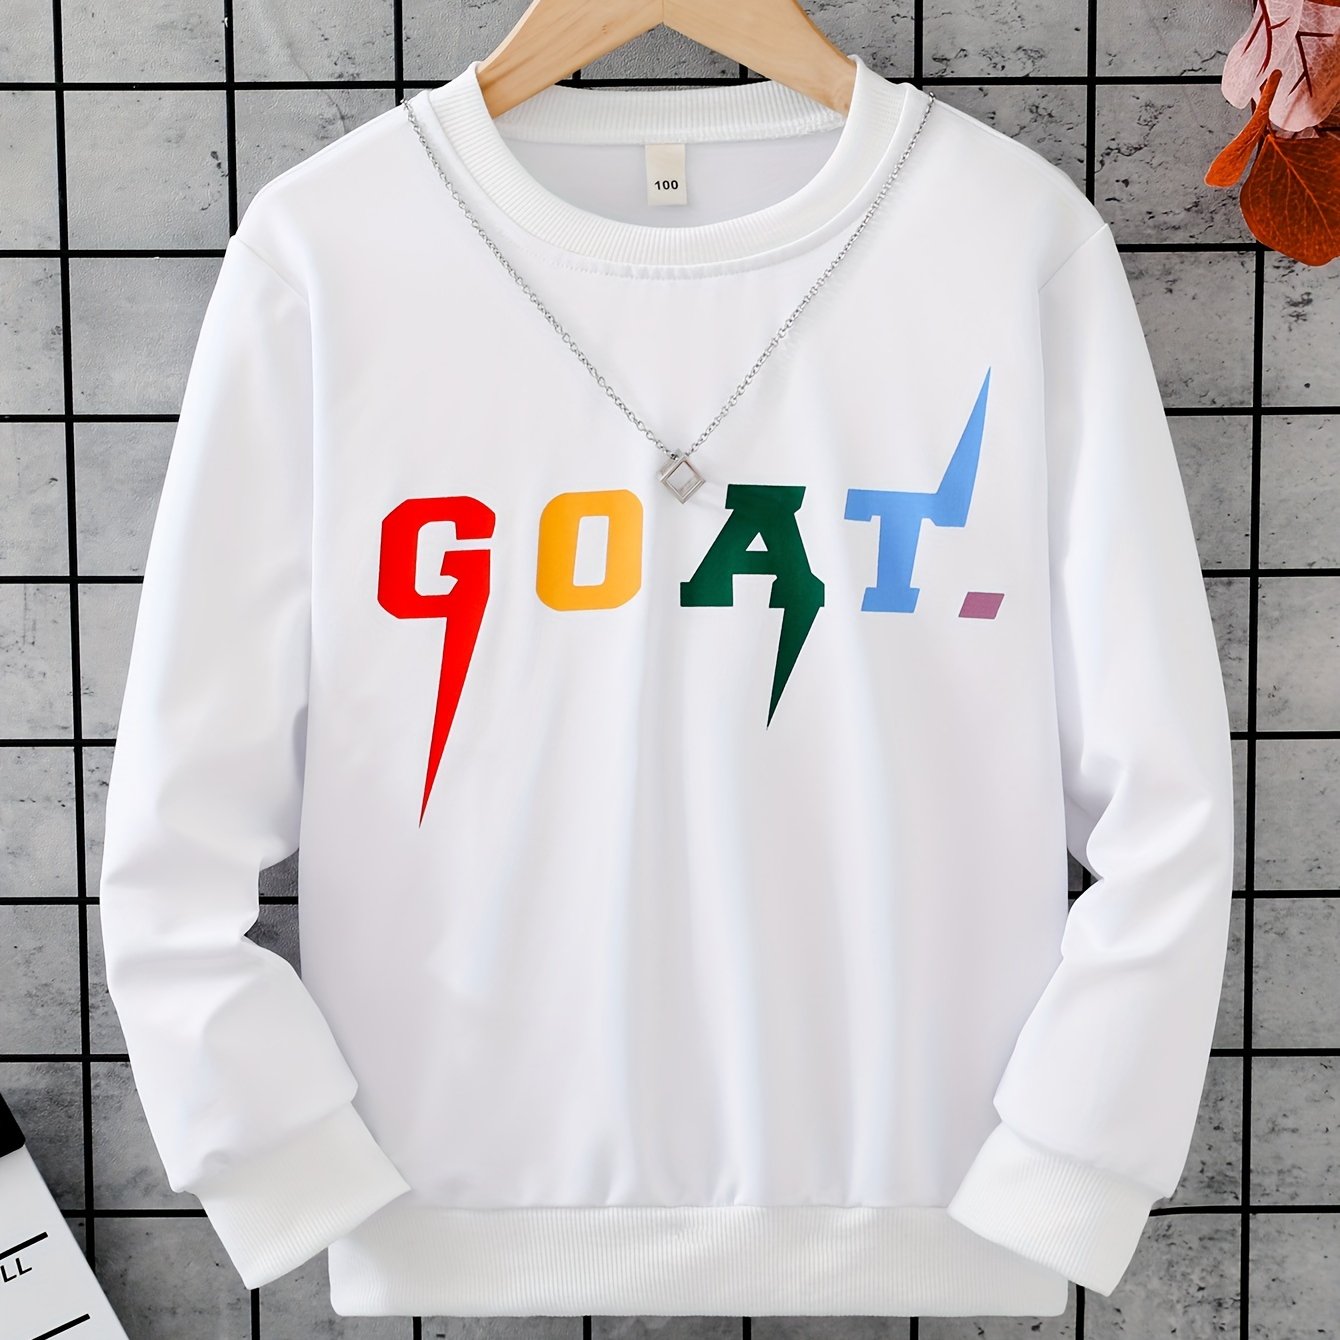 Polo G Merch Album Shirt, hoodie, sweater and long sleeve